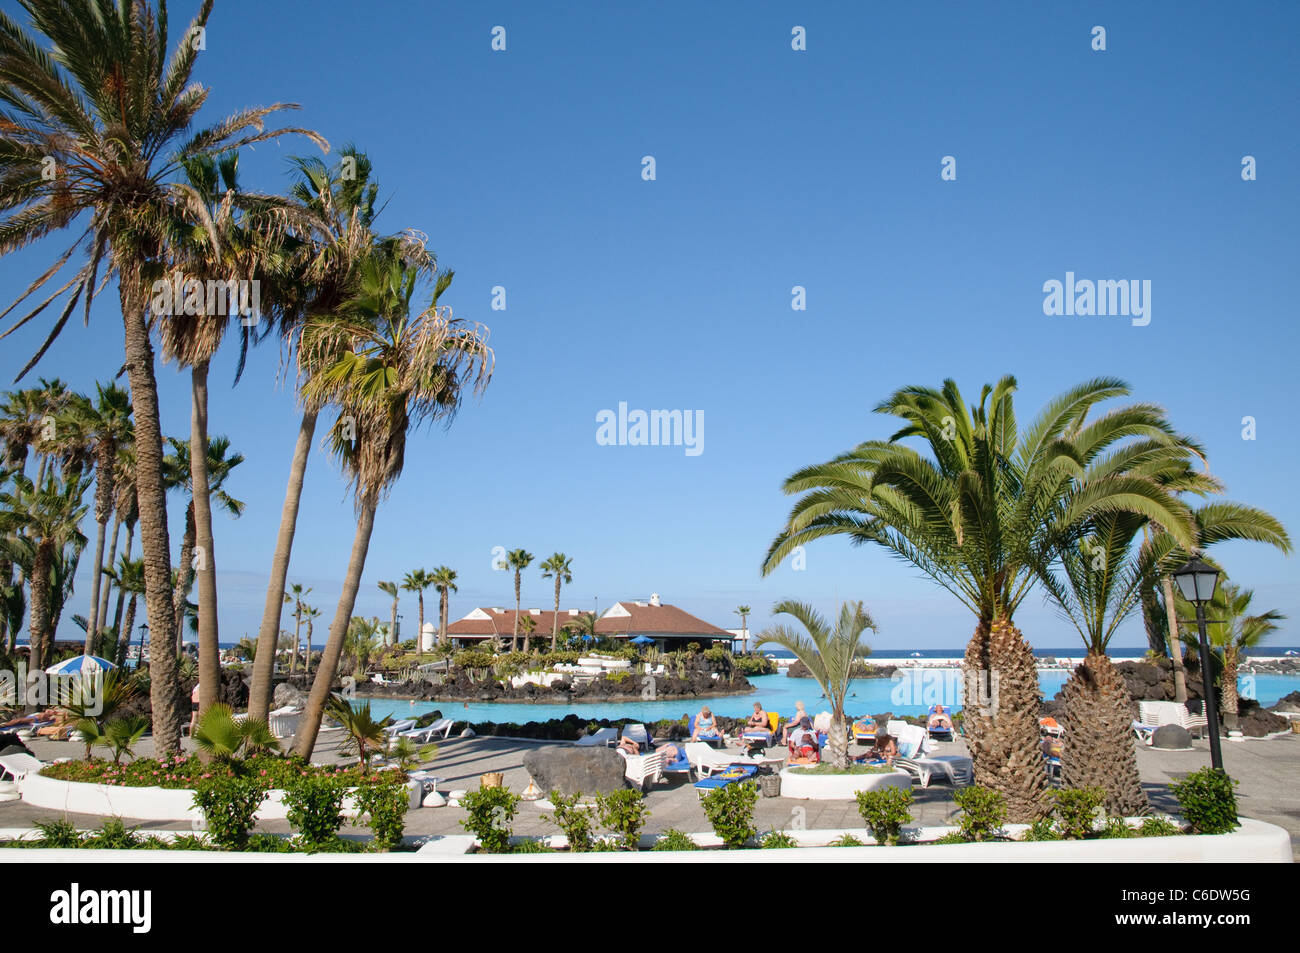 Lago de Martianez, piscine d'eau de mer, Puerto de la Cruz, Tenerife, Canaries, Espagne, Europe Banque D'Images